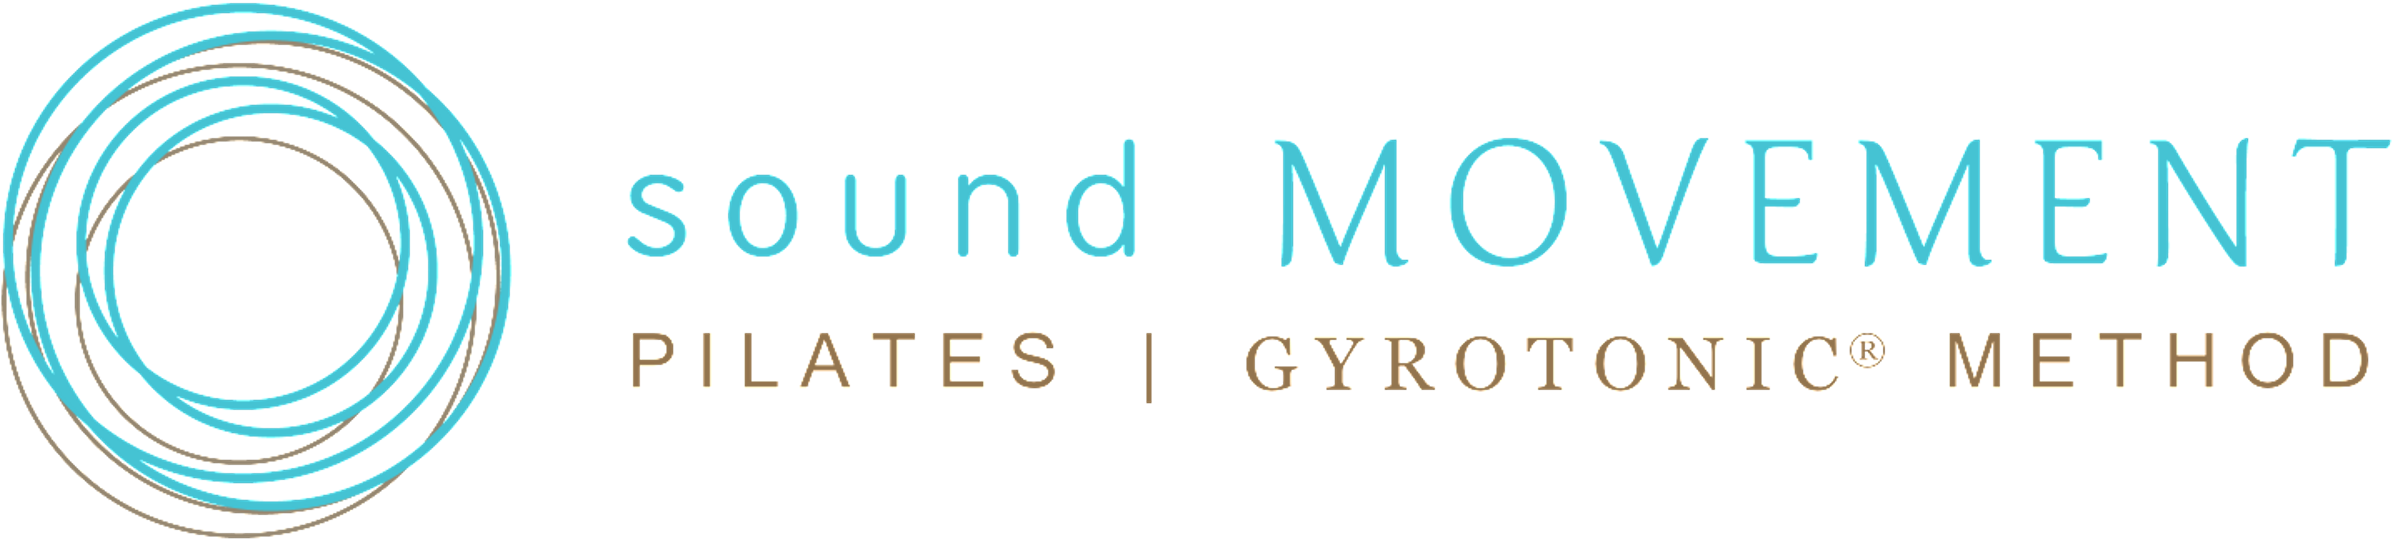 Sound Movement Pilates Gyrotonic Logo PNG image